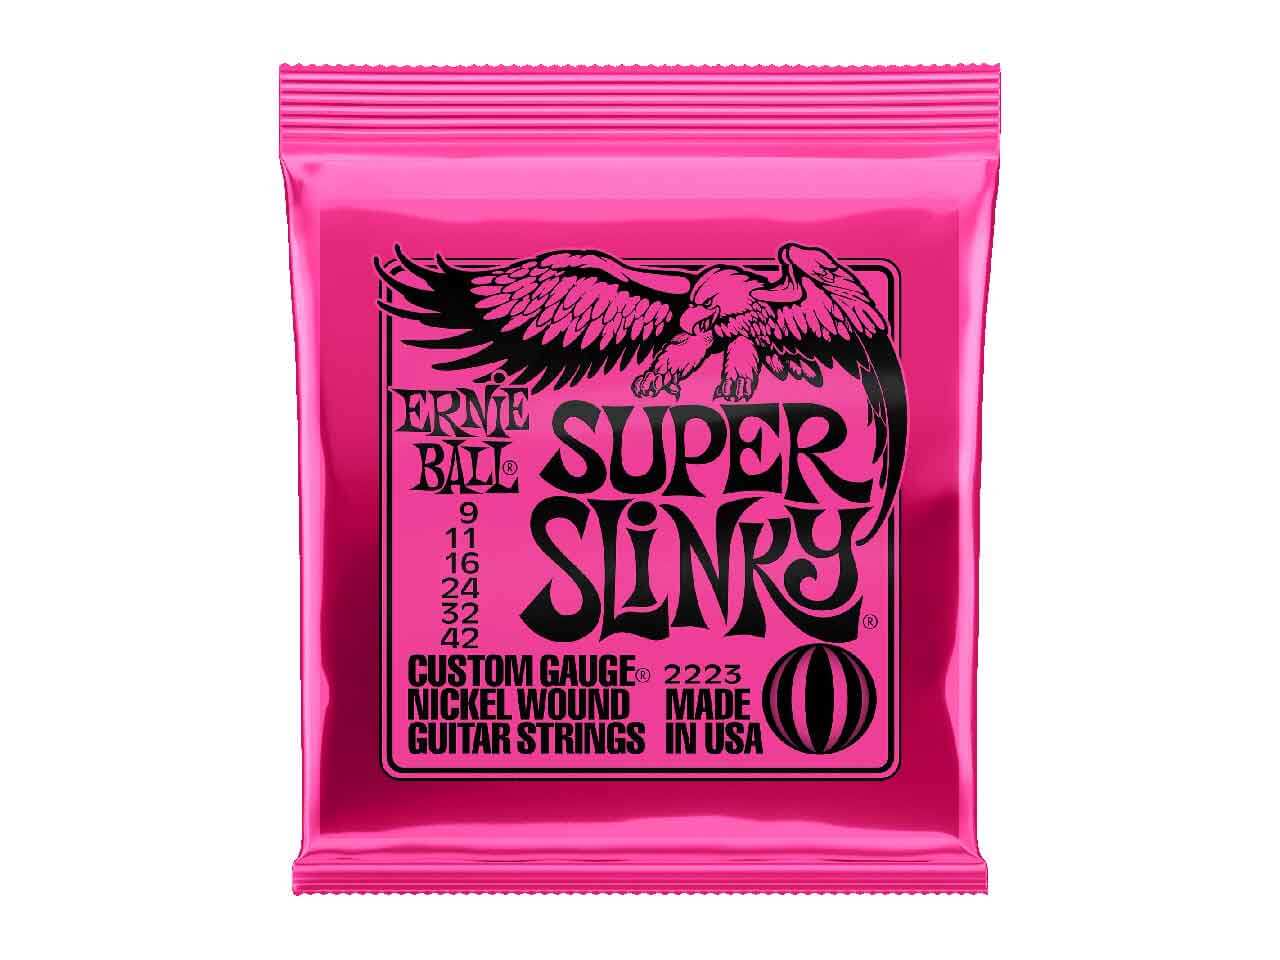 ERNiE BALL(アーニーボール) SUPER SLINKY / 09-42 #2223 (エレキギター弦)